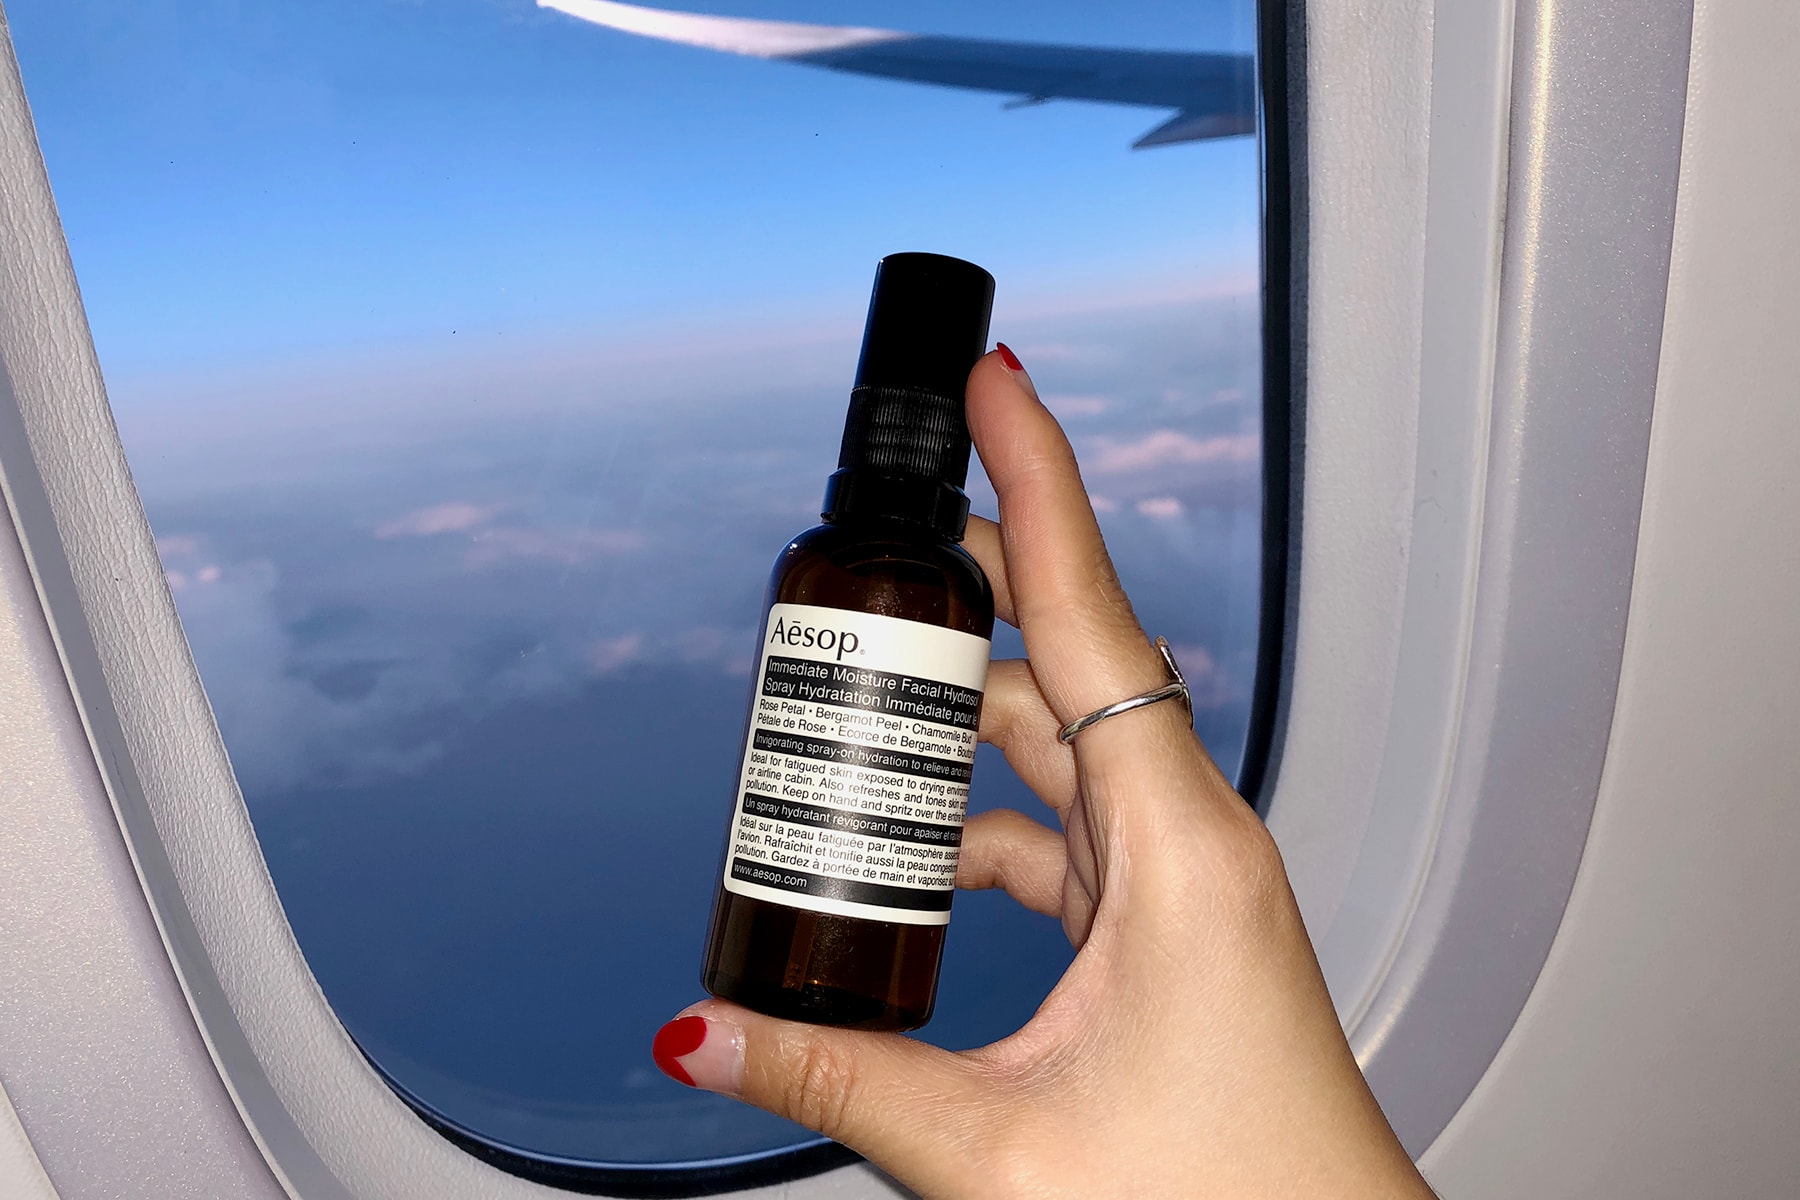 Aesop Immediate Moisture Facial Hydrosol Face Mist Spray Gelcream Travel Skincare Essentials Long Haul Flight Plane Window Seat Beauty